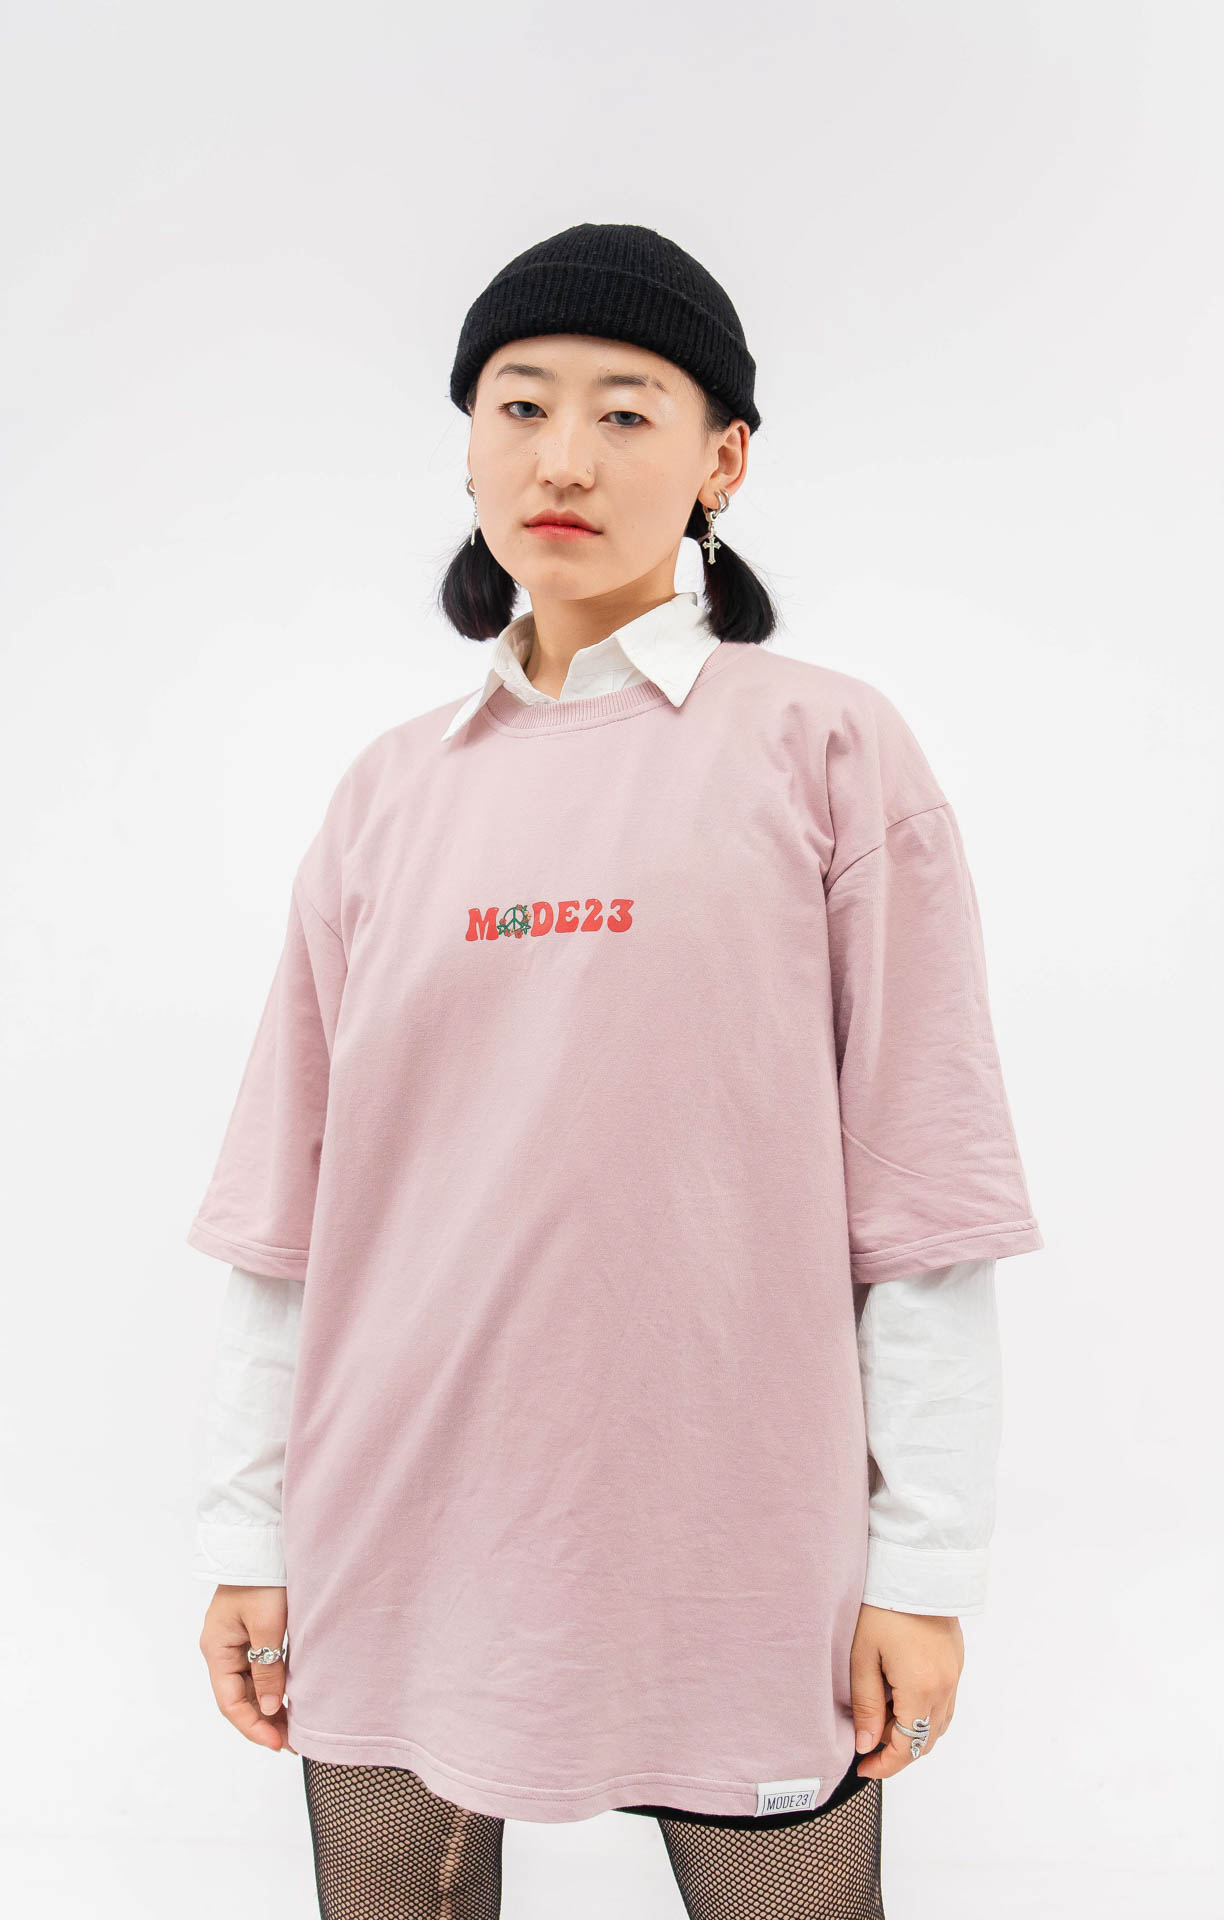 MODE23 Peace Pink Tshirt